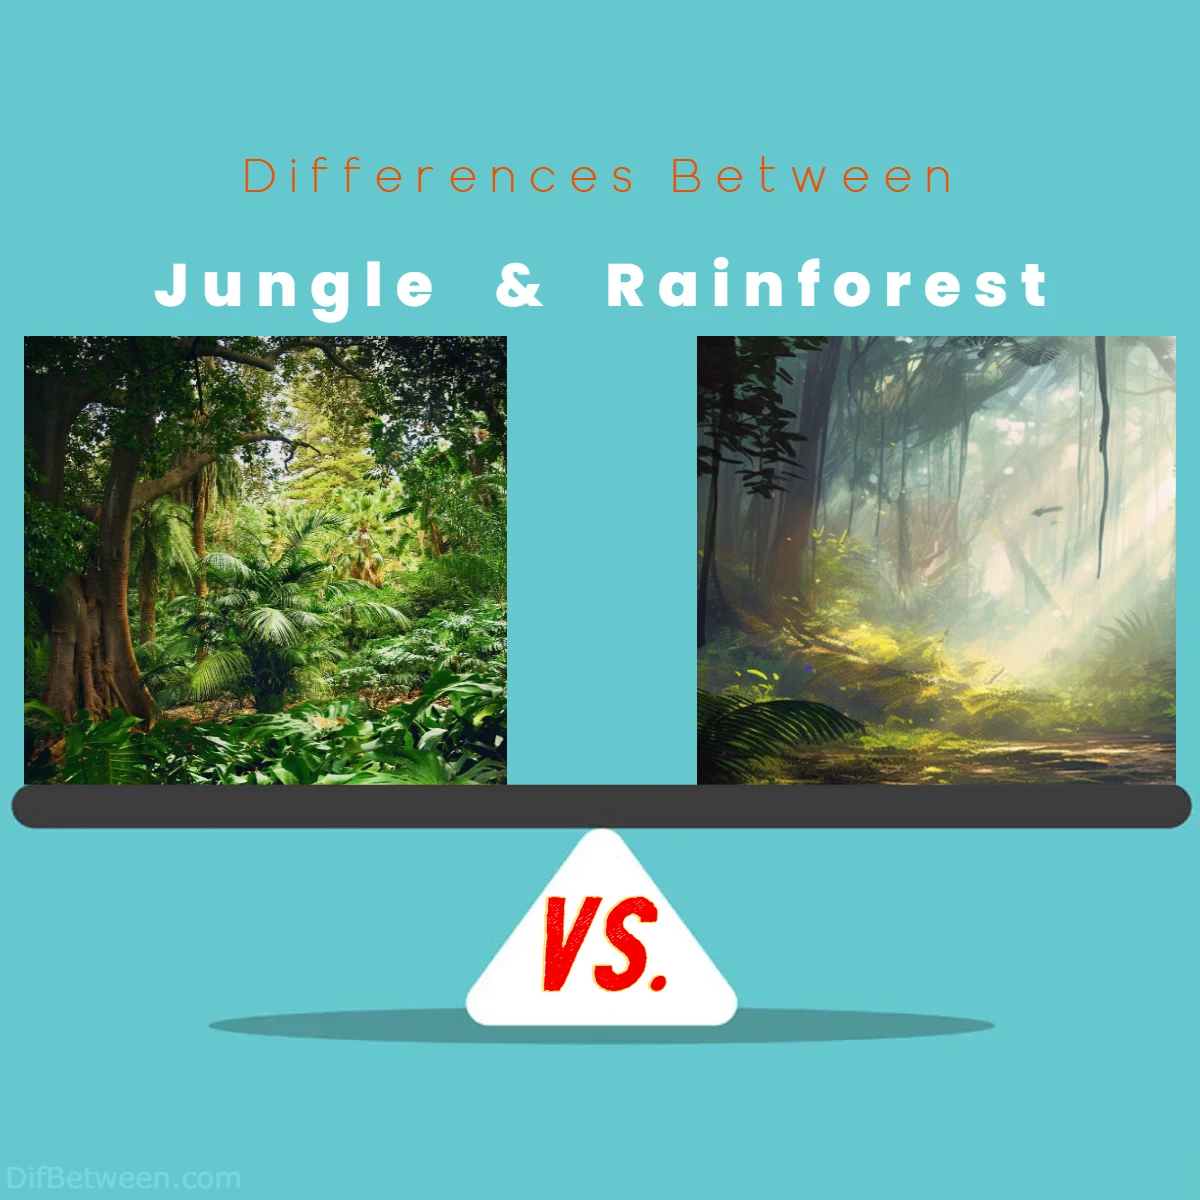 Differences Between Jungle vs Rainforest